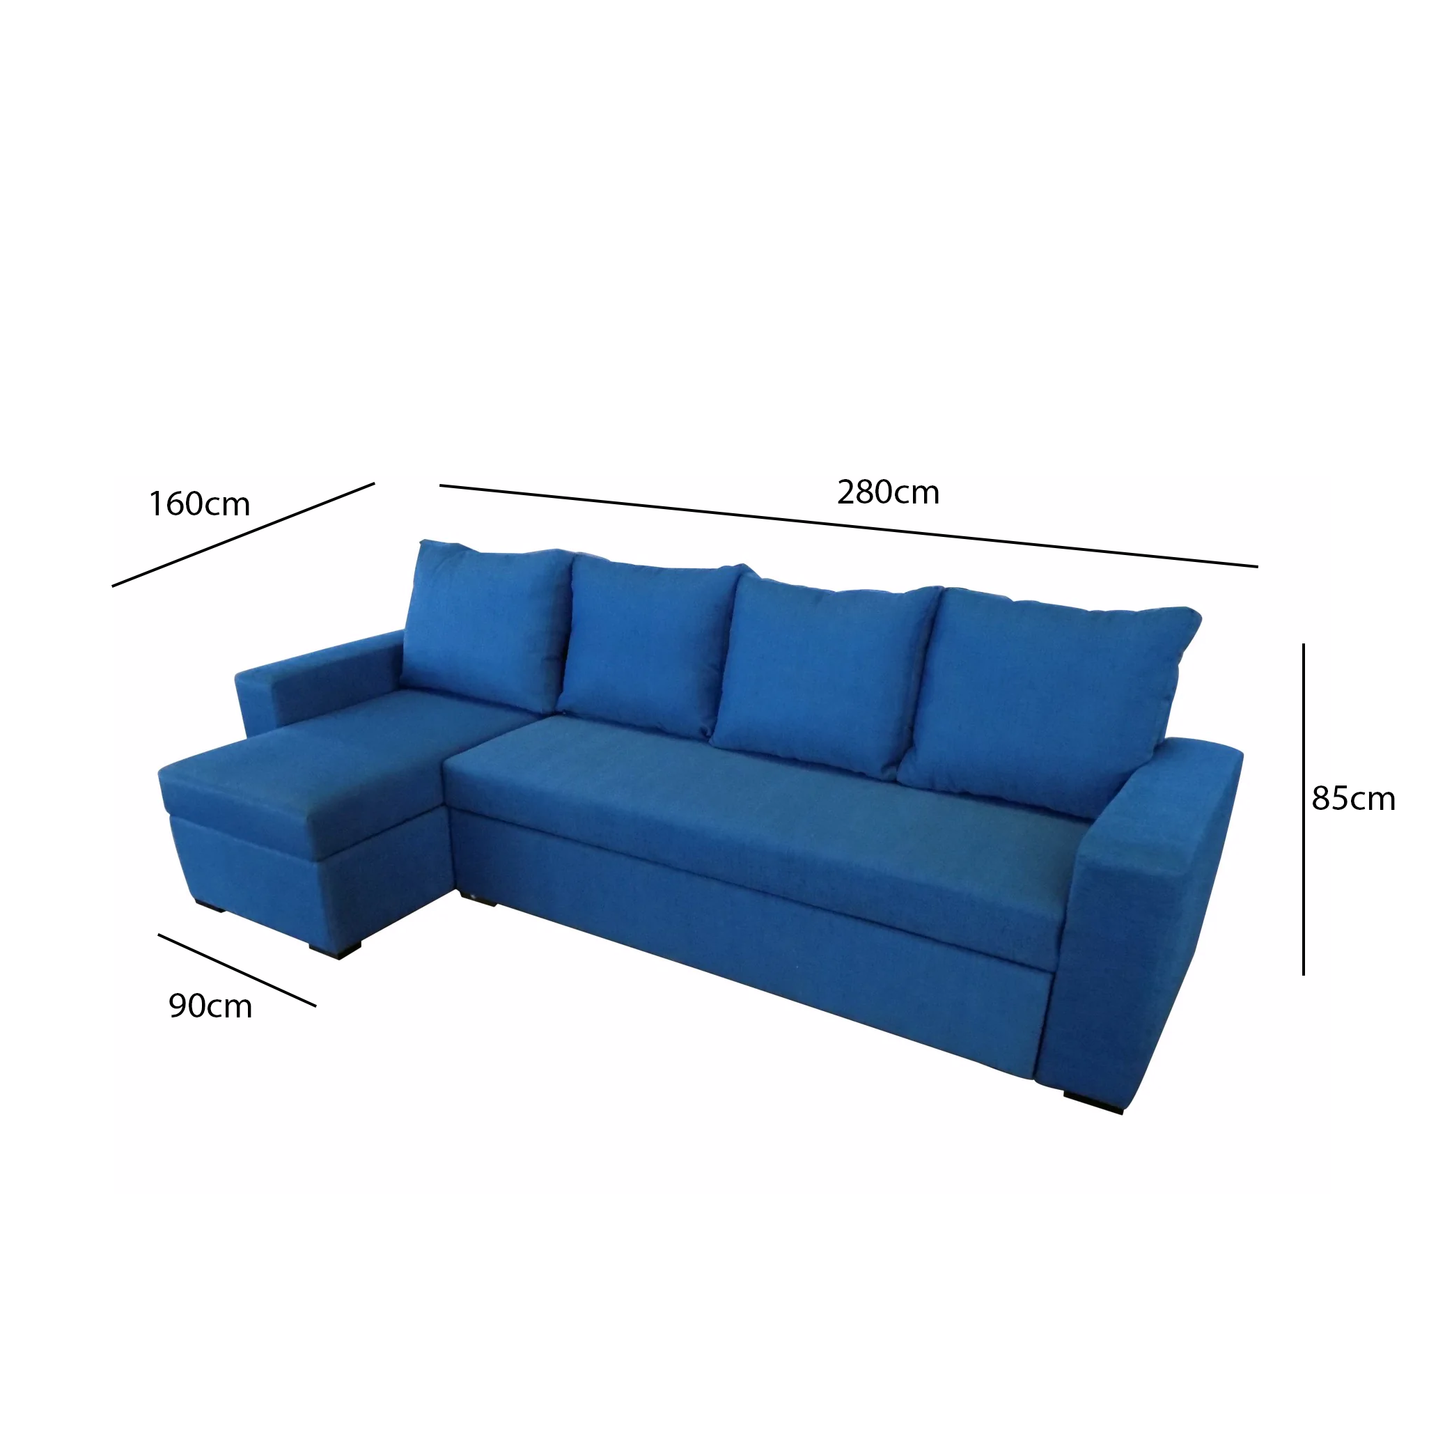 Beech wood sofa corner 280 x 160 cm - multiple colors - KM140